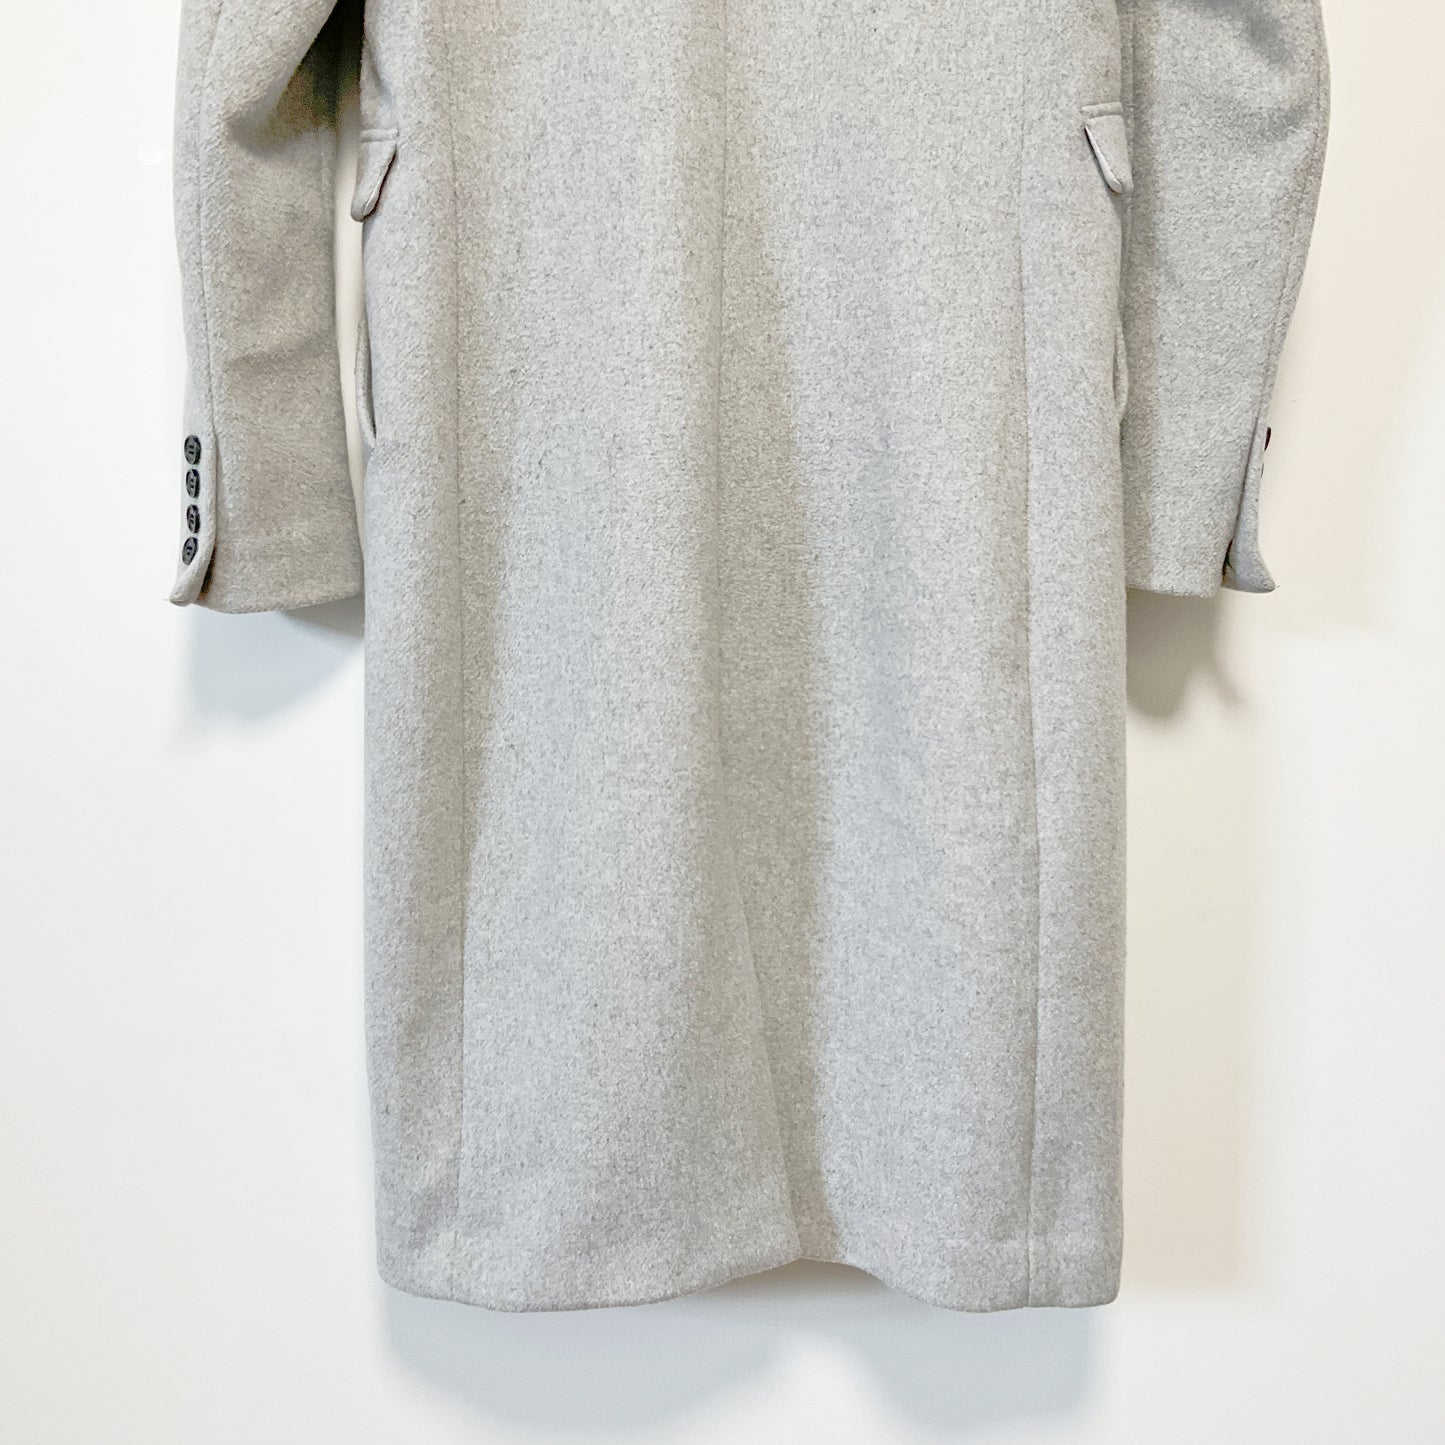 Decjuba - Wool Blend Grey Coat